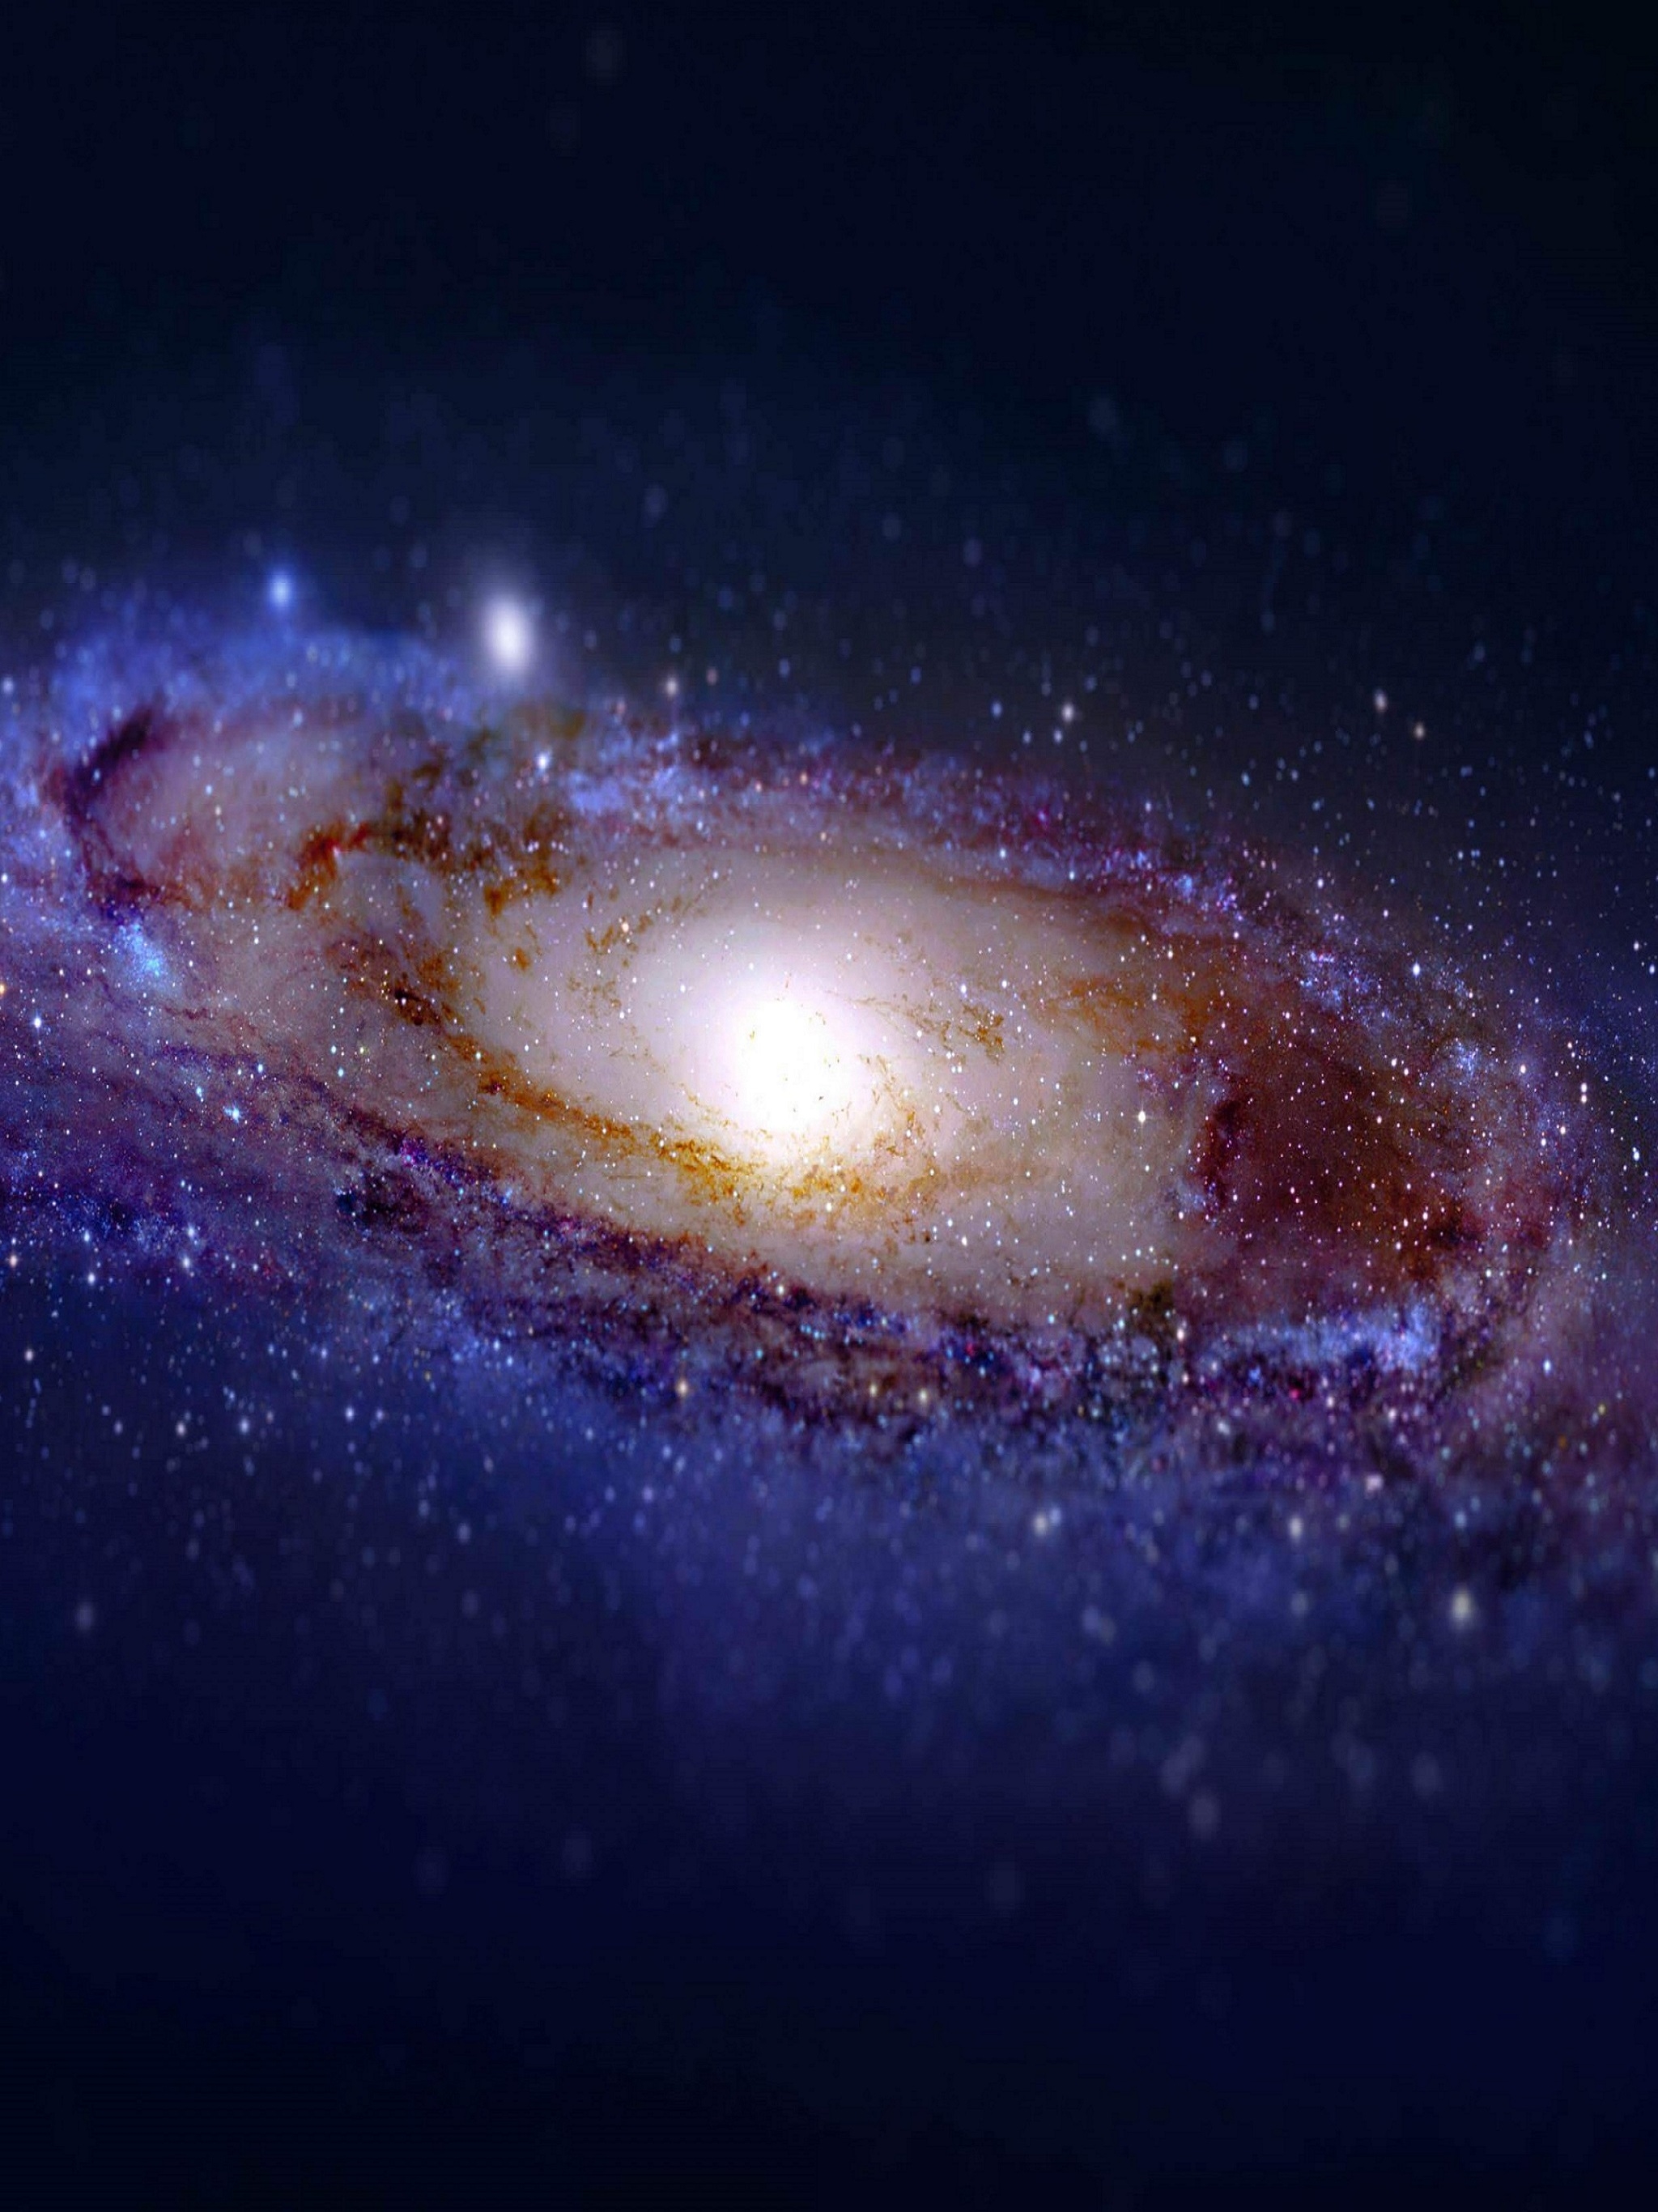 Andromeda Galaxy for Apple iPad Pro resolution